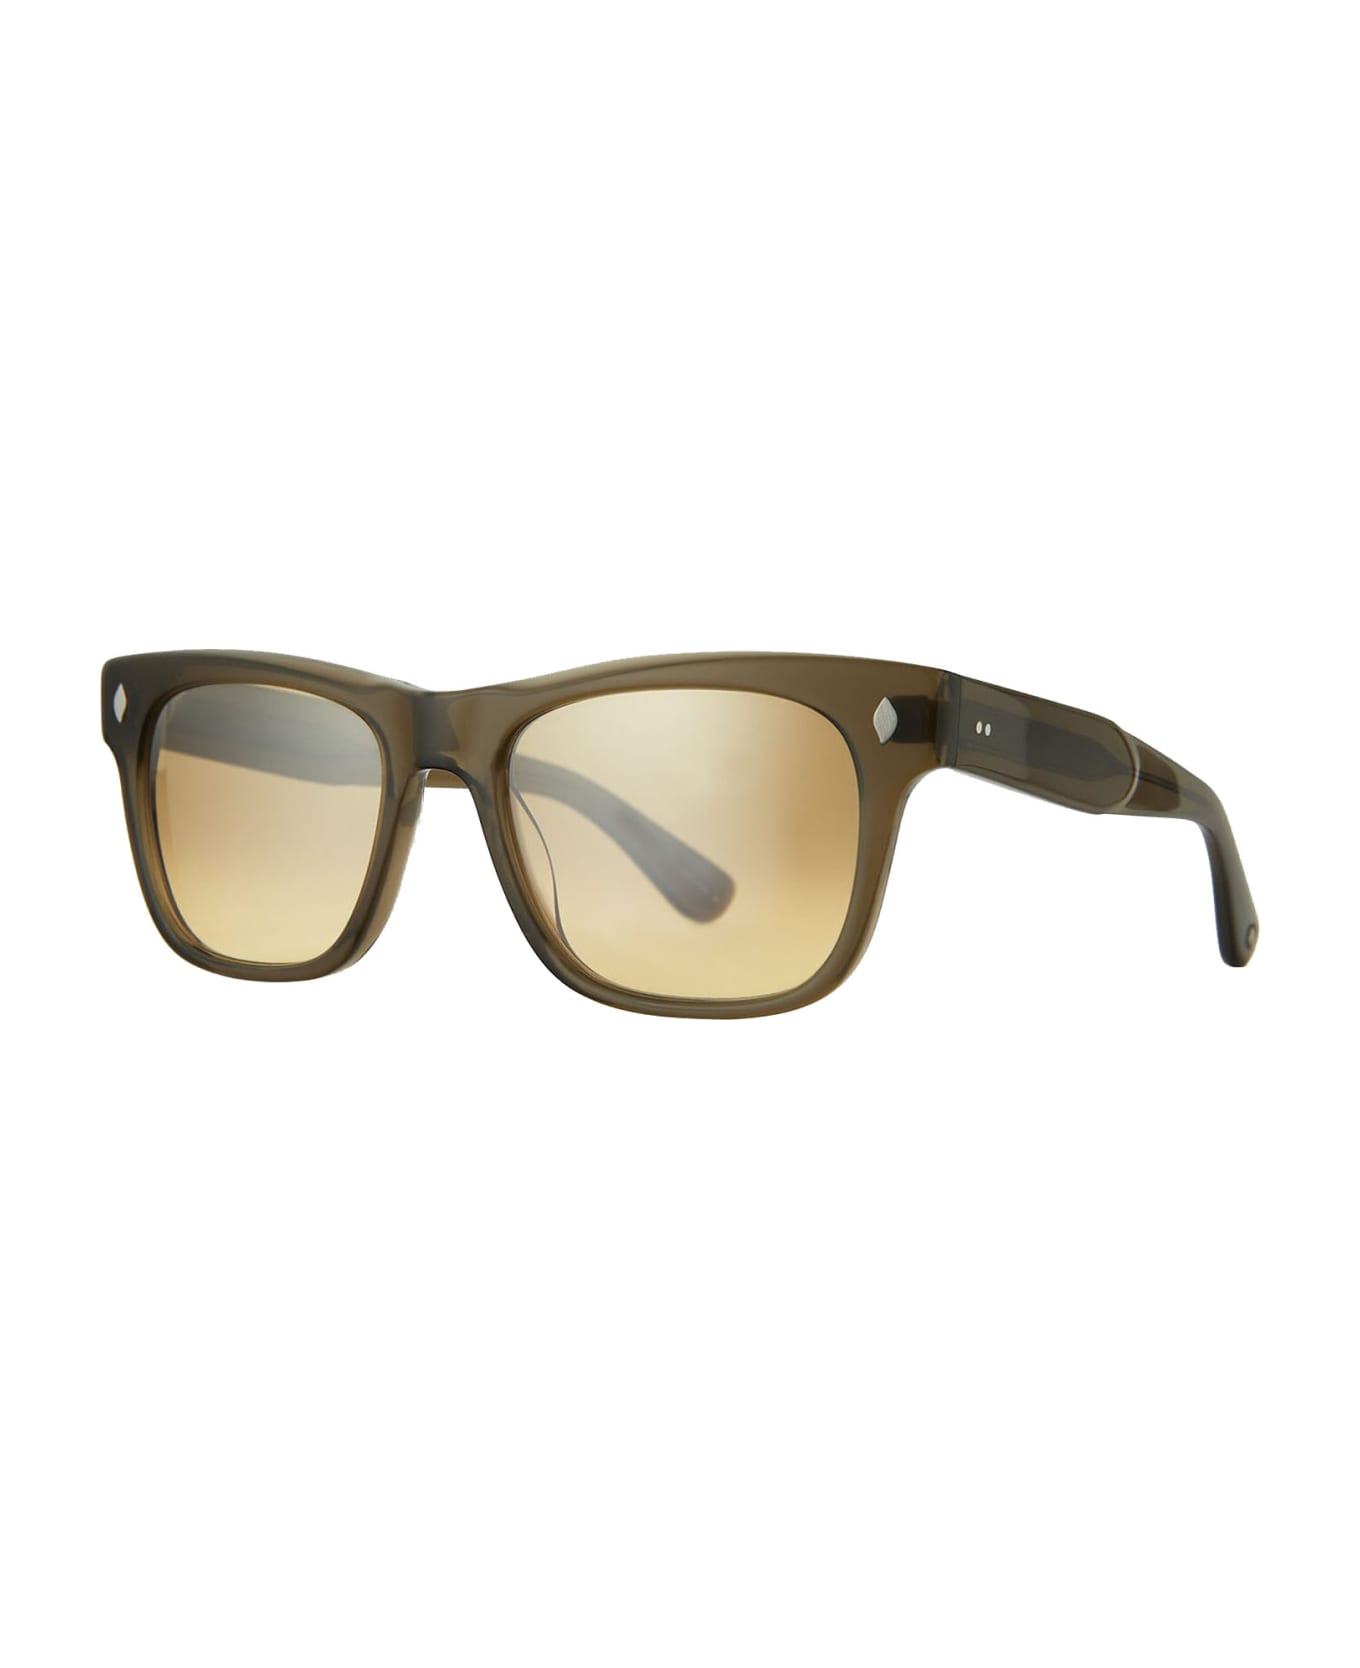 Garrett Leight 2097/52 TROUBADOUR 52 Sunglasses - Olio/hm サングラス